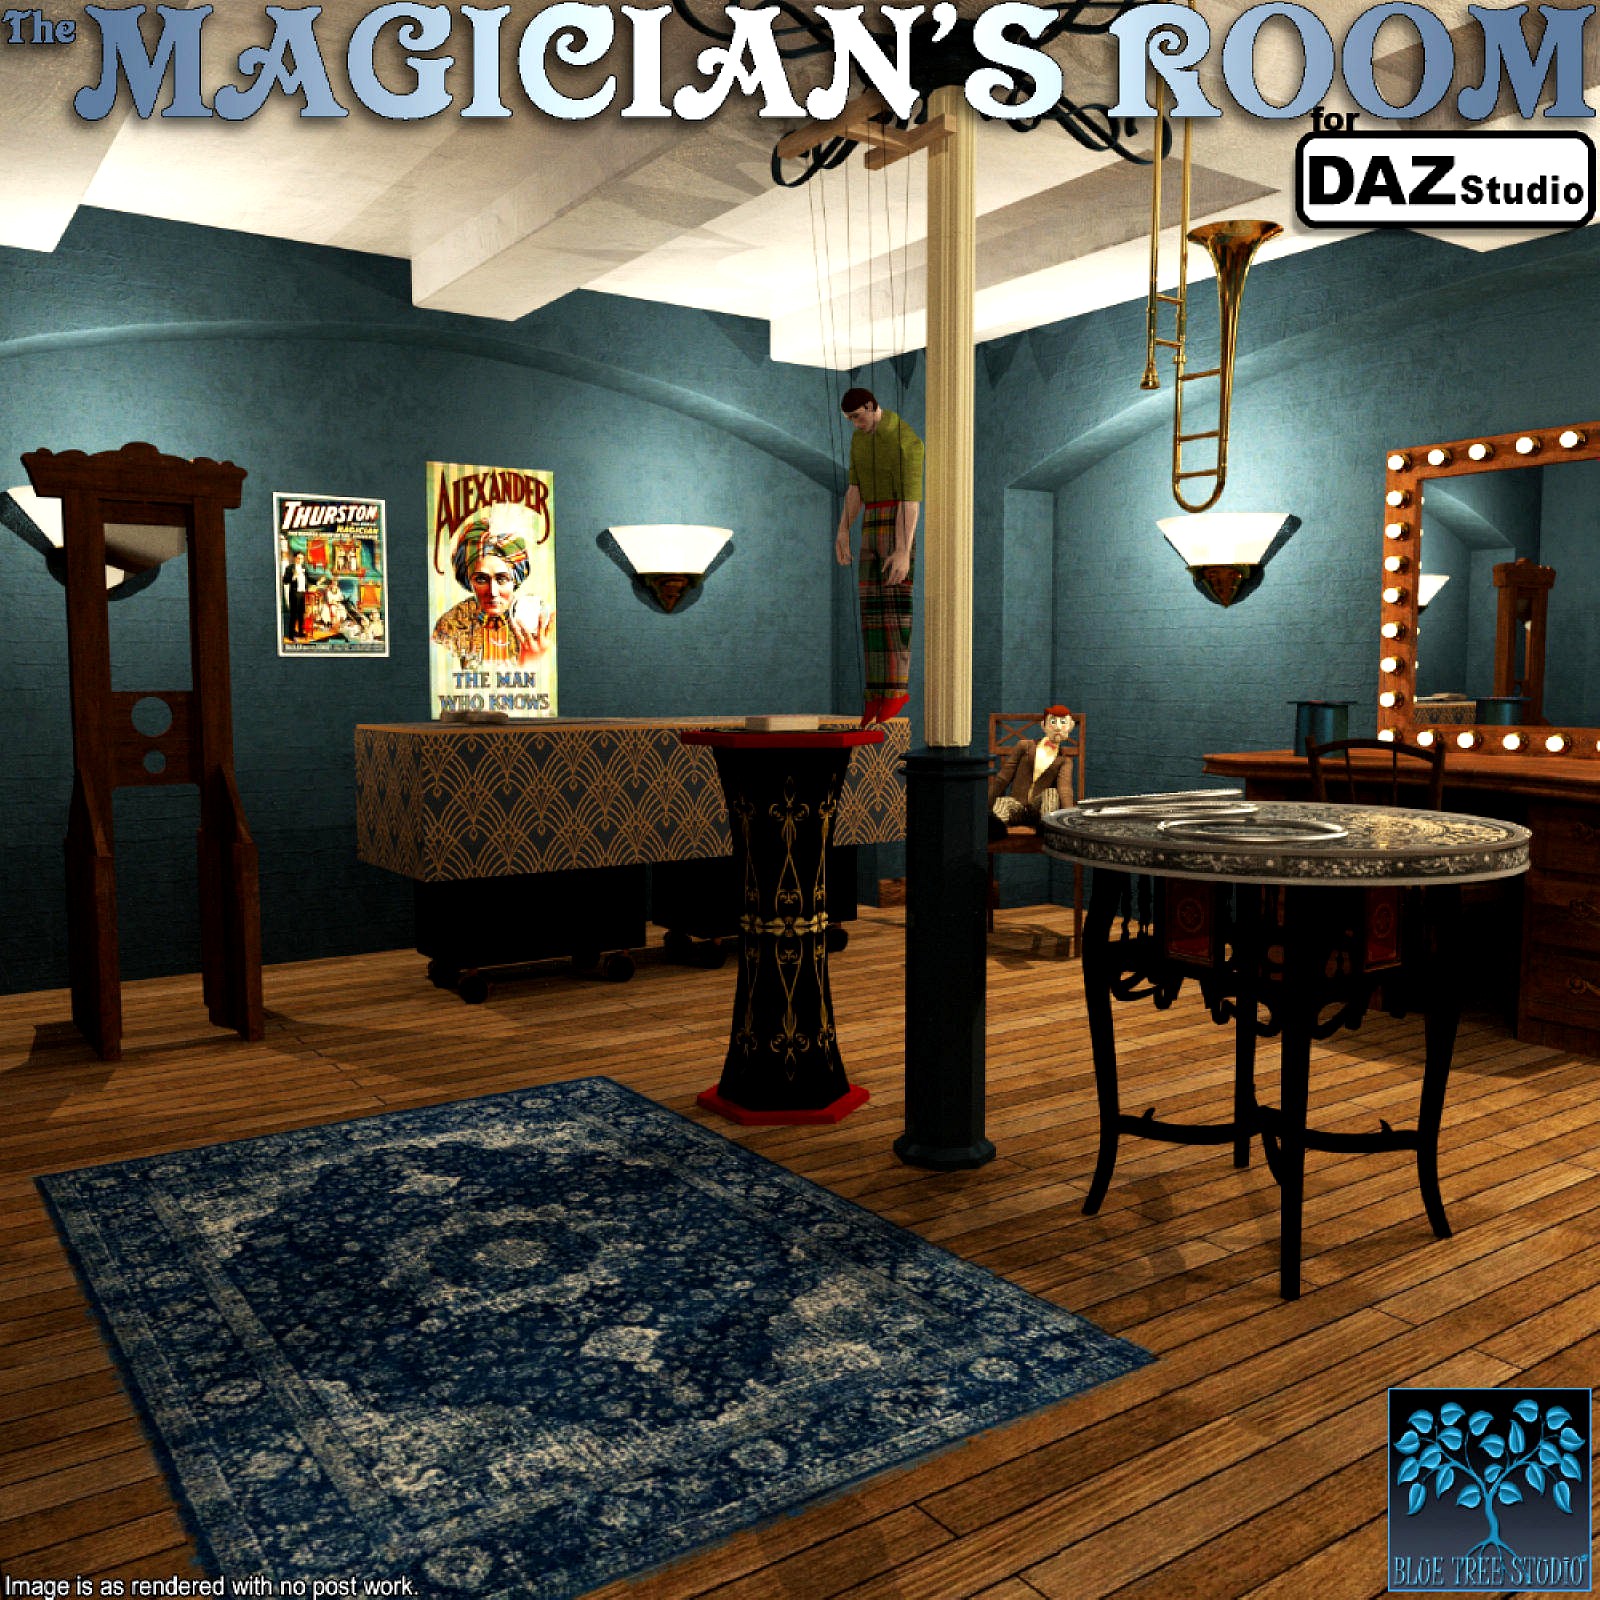 The Magician's Room for DAZ Studio